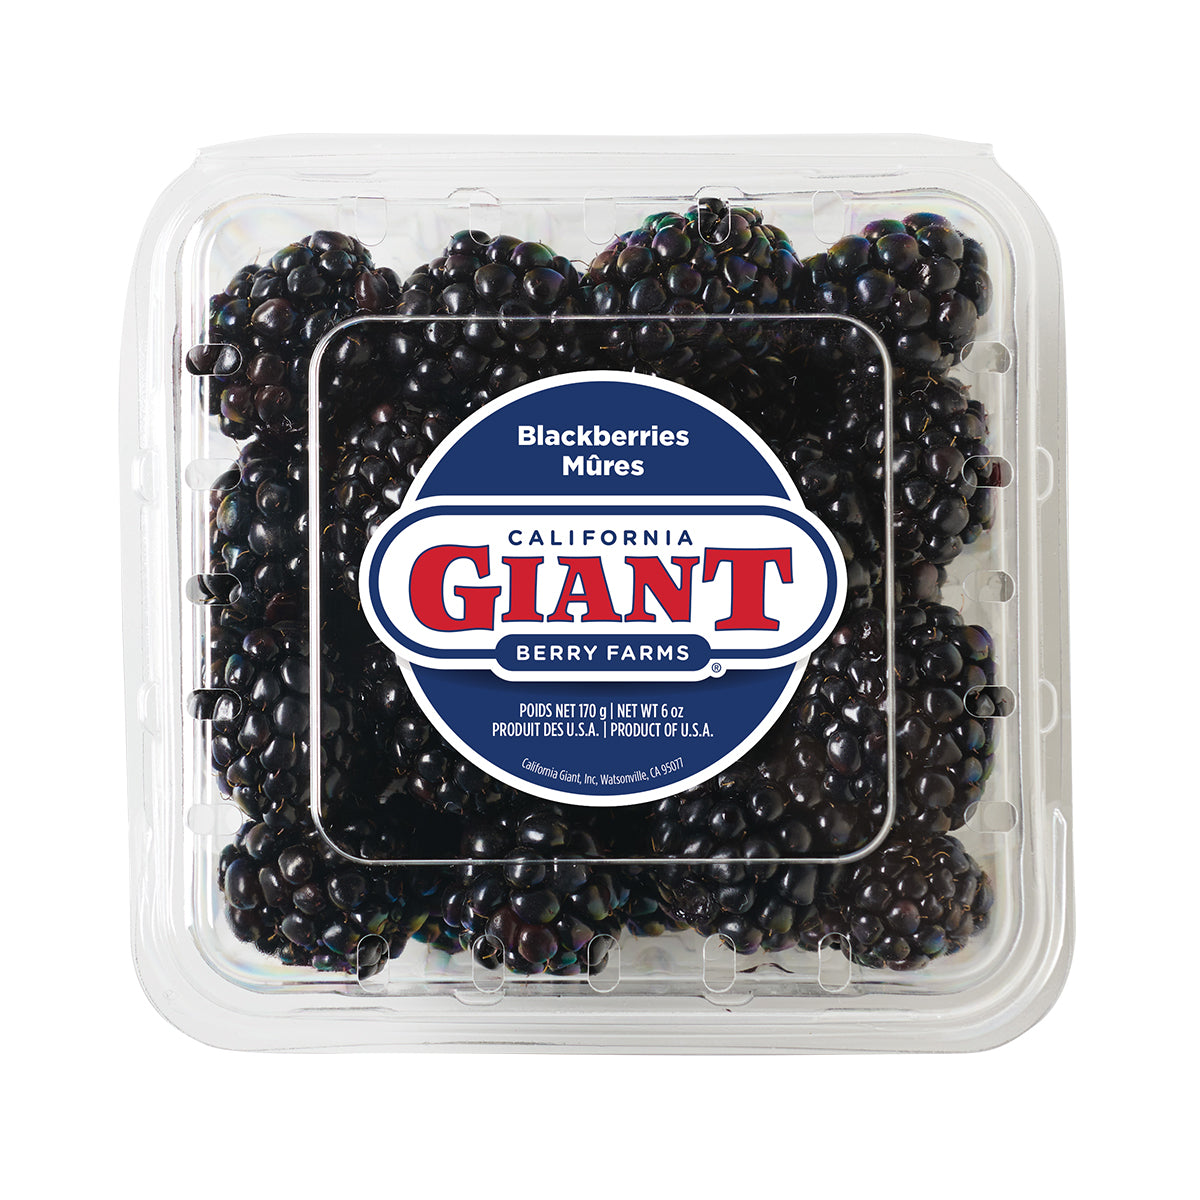 California Giant Berry Farms Blackberries 6 Oz Box